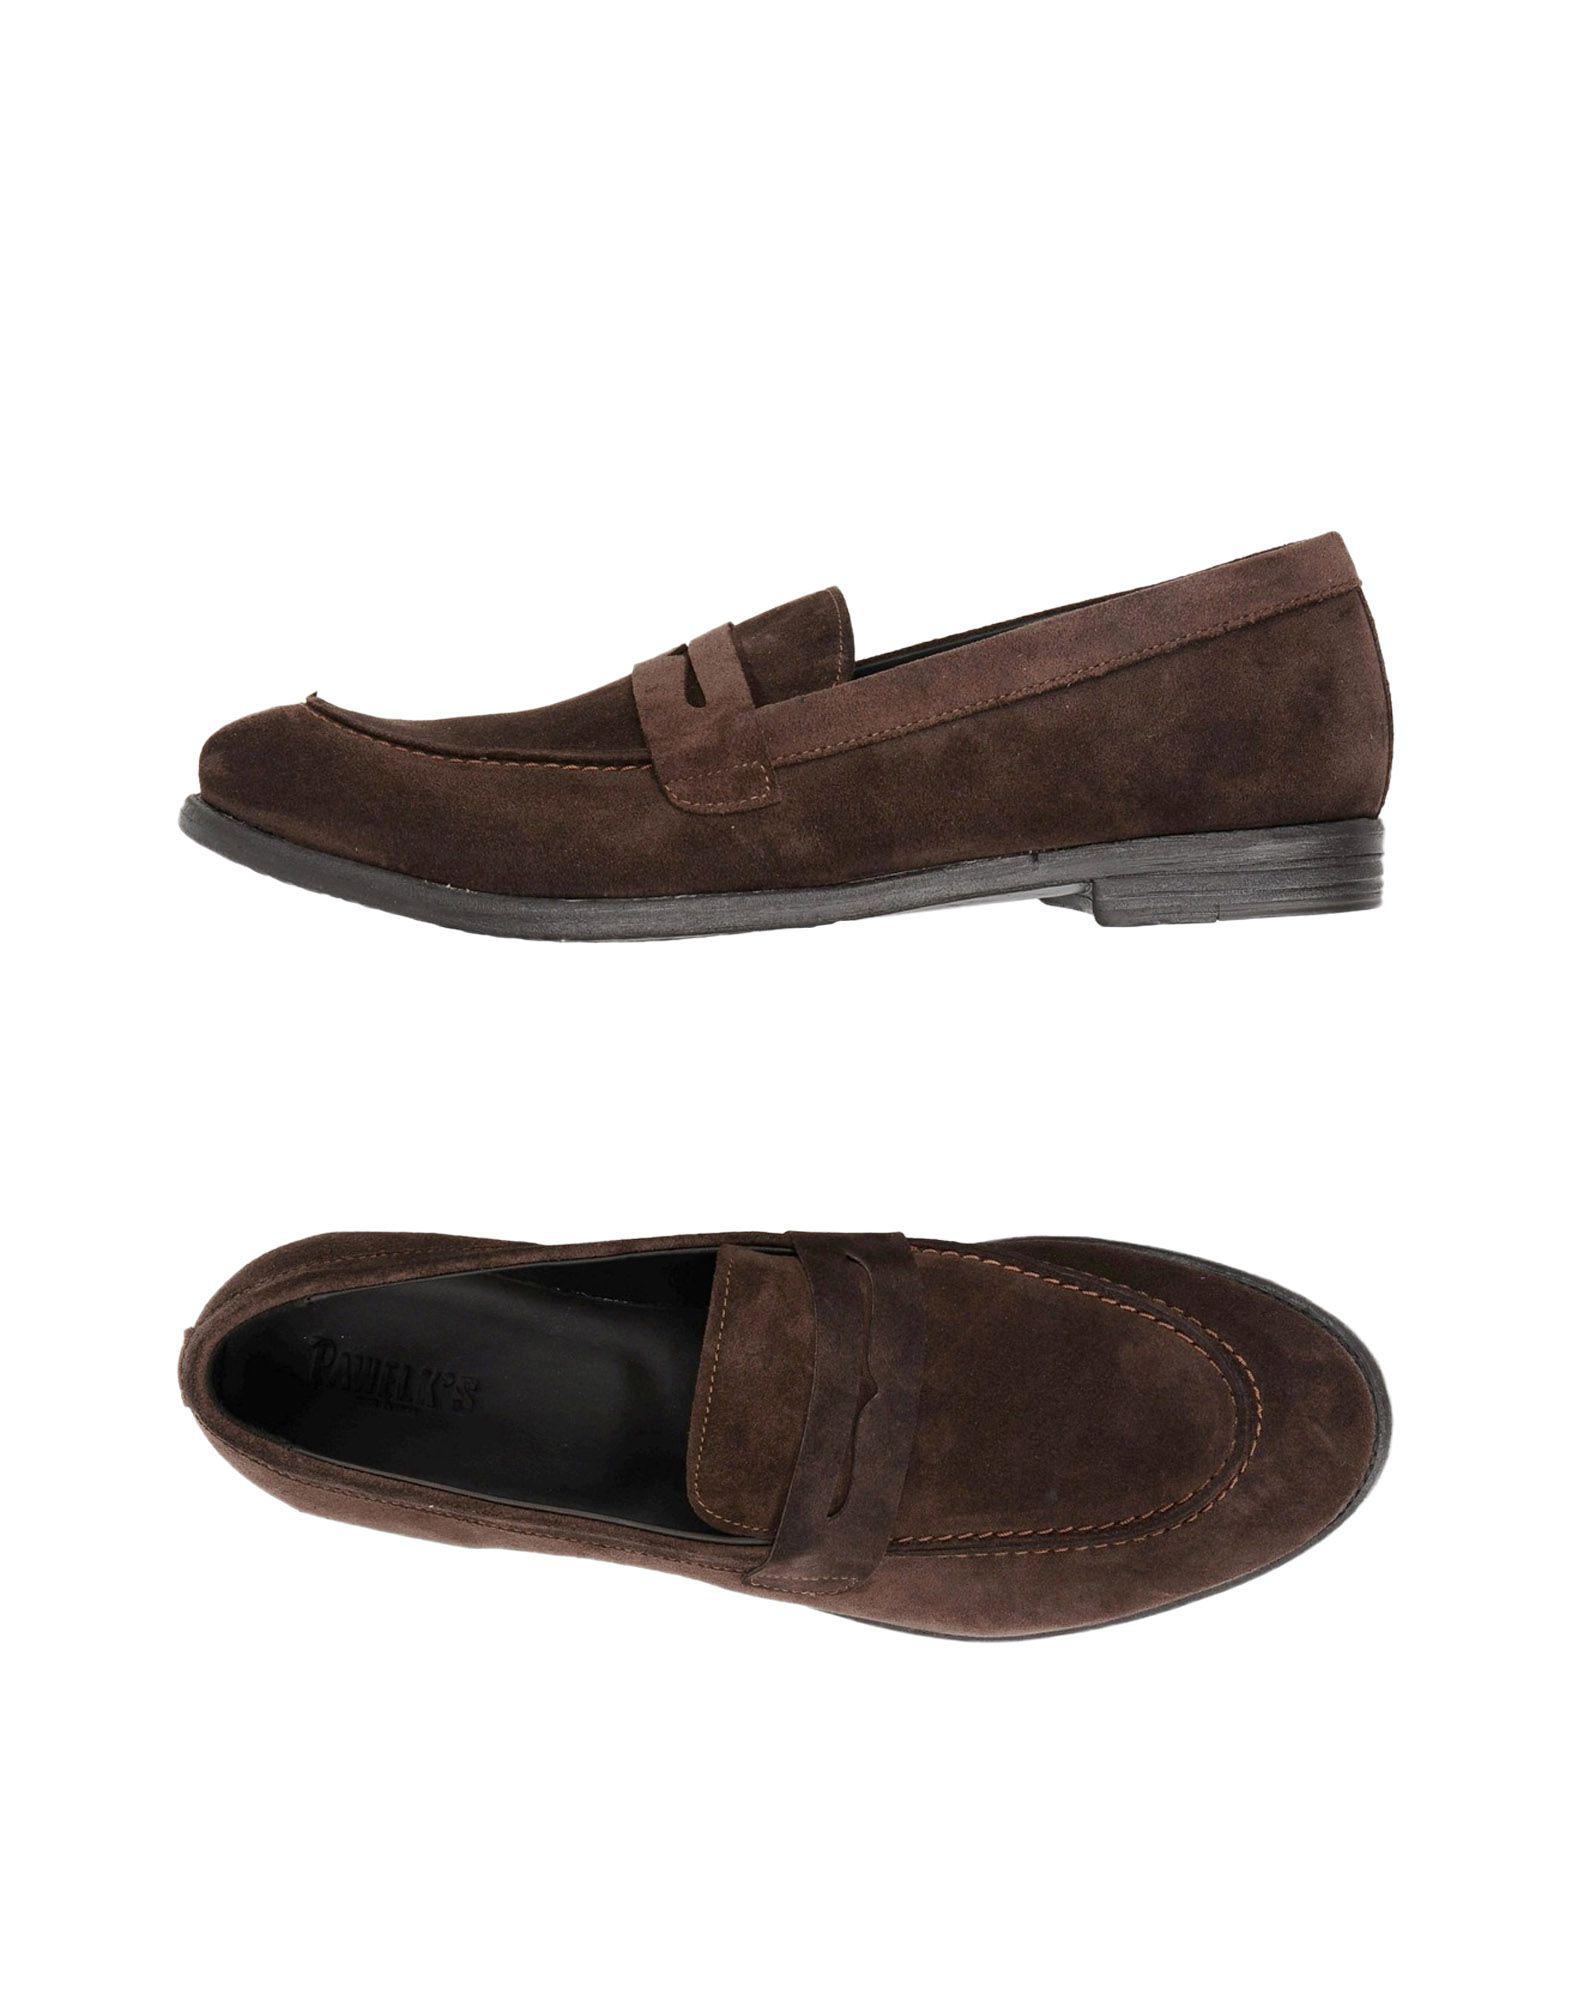 Pawelk's Leather Loafer in Dark Brown (Brown) for Men - Lyst